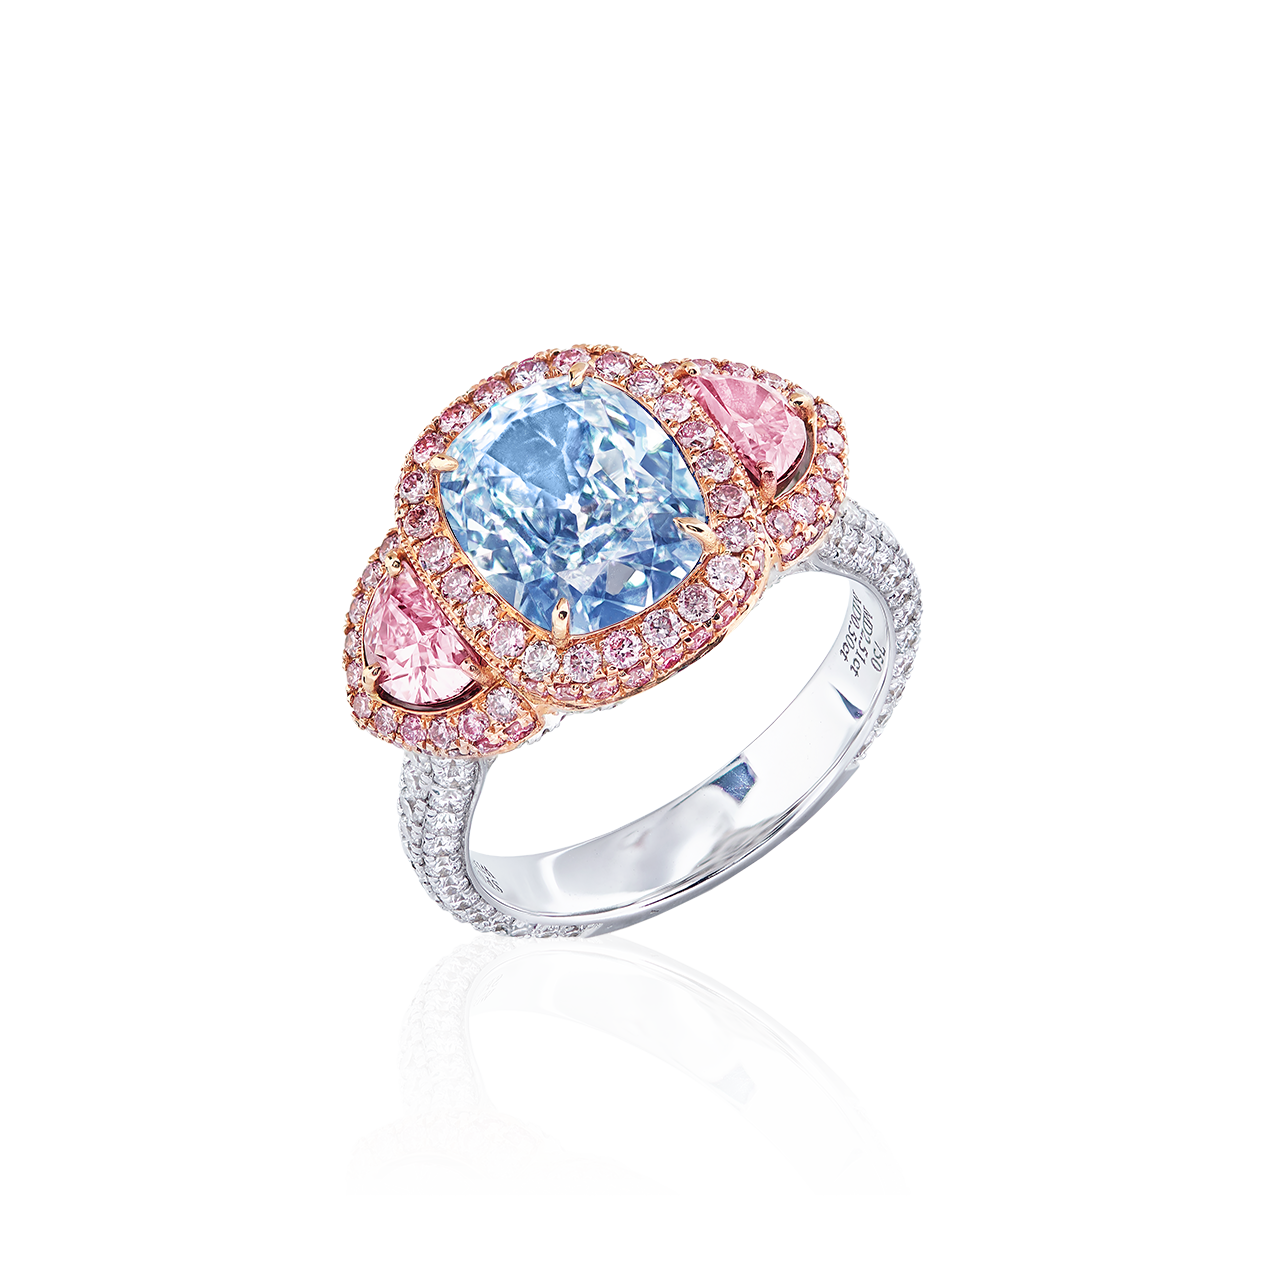 GIA 2.51克拉 淡彩藍彩鑽鑽戒
Fancy Light Blue Colored Diamond
and Diamond Ring